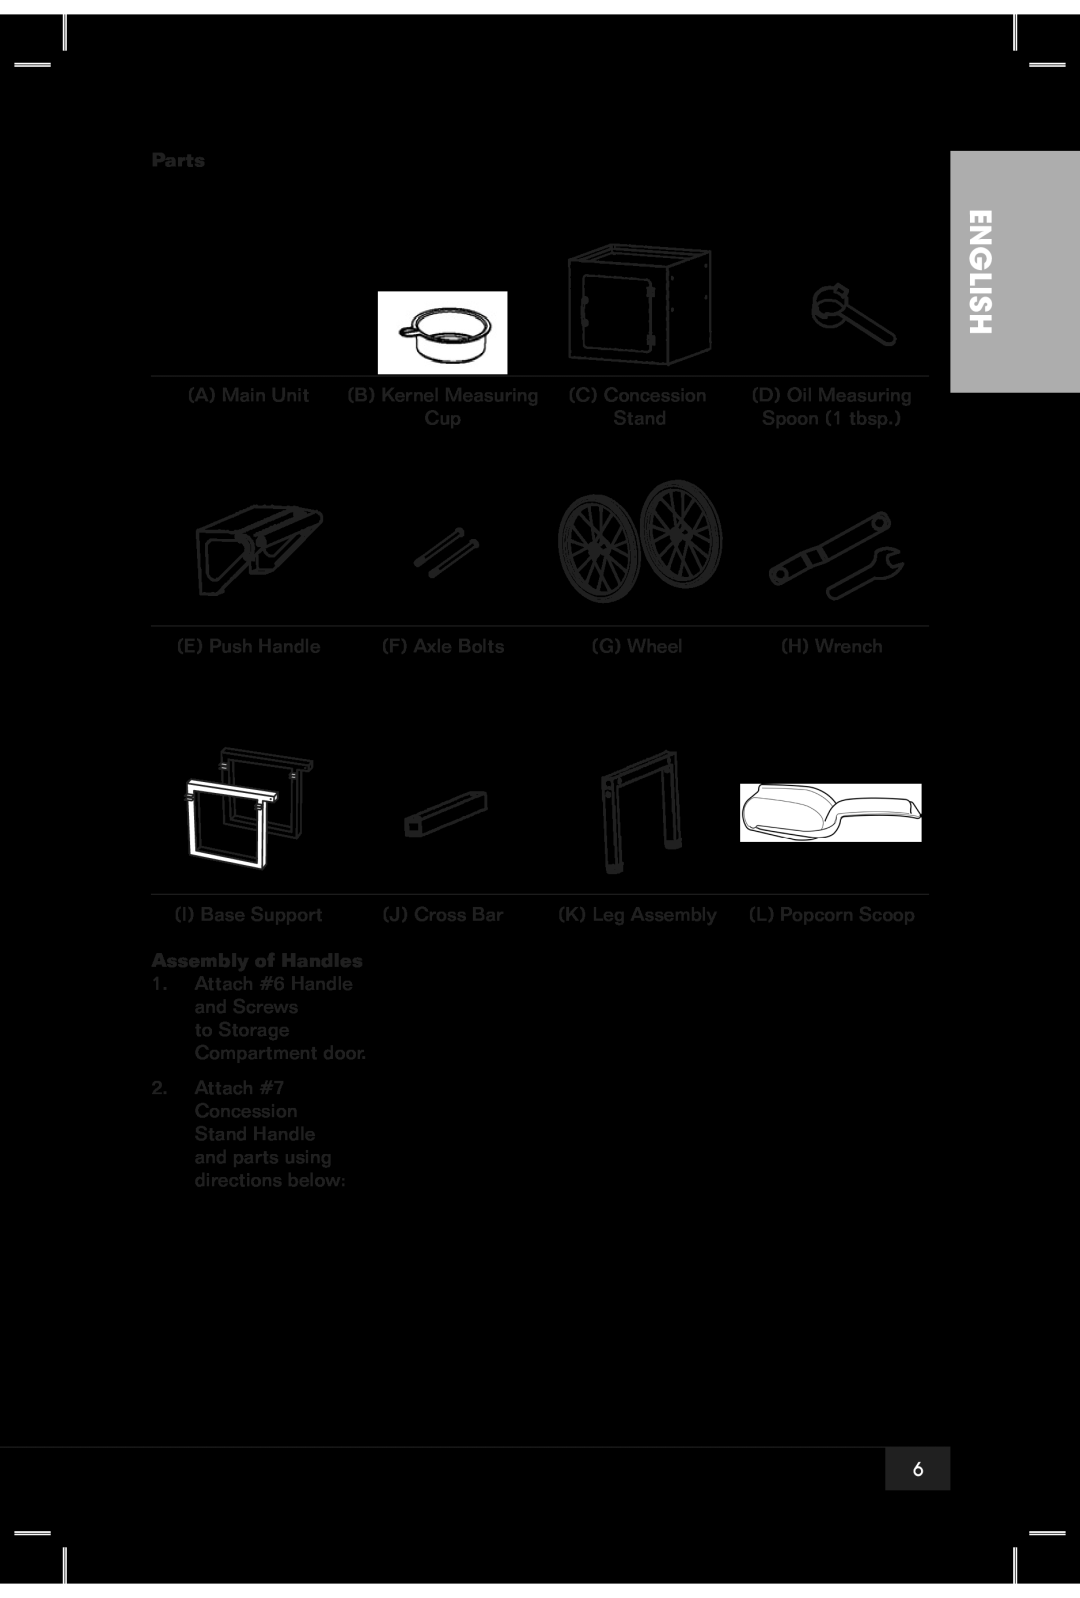 Nostalgia Electrics CCP610 manual English, Parts, Assembly of Handles 